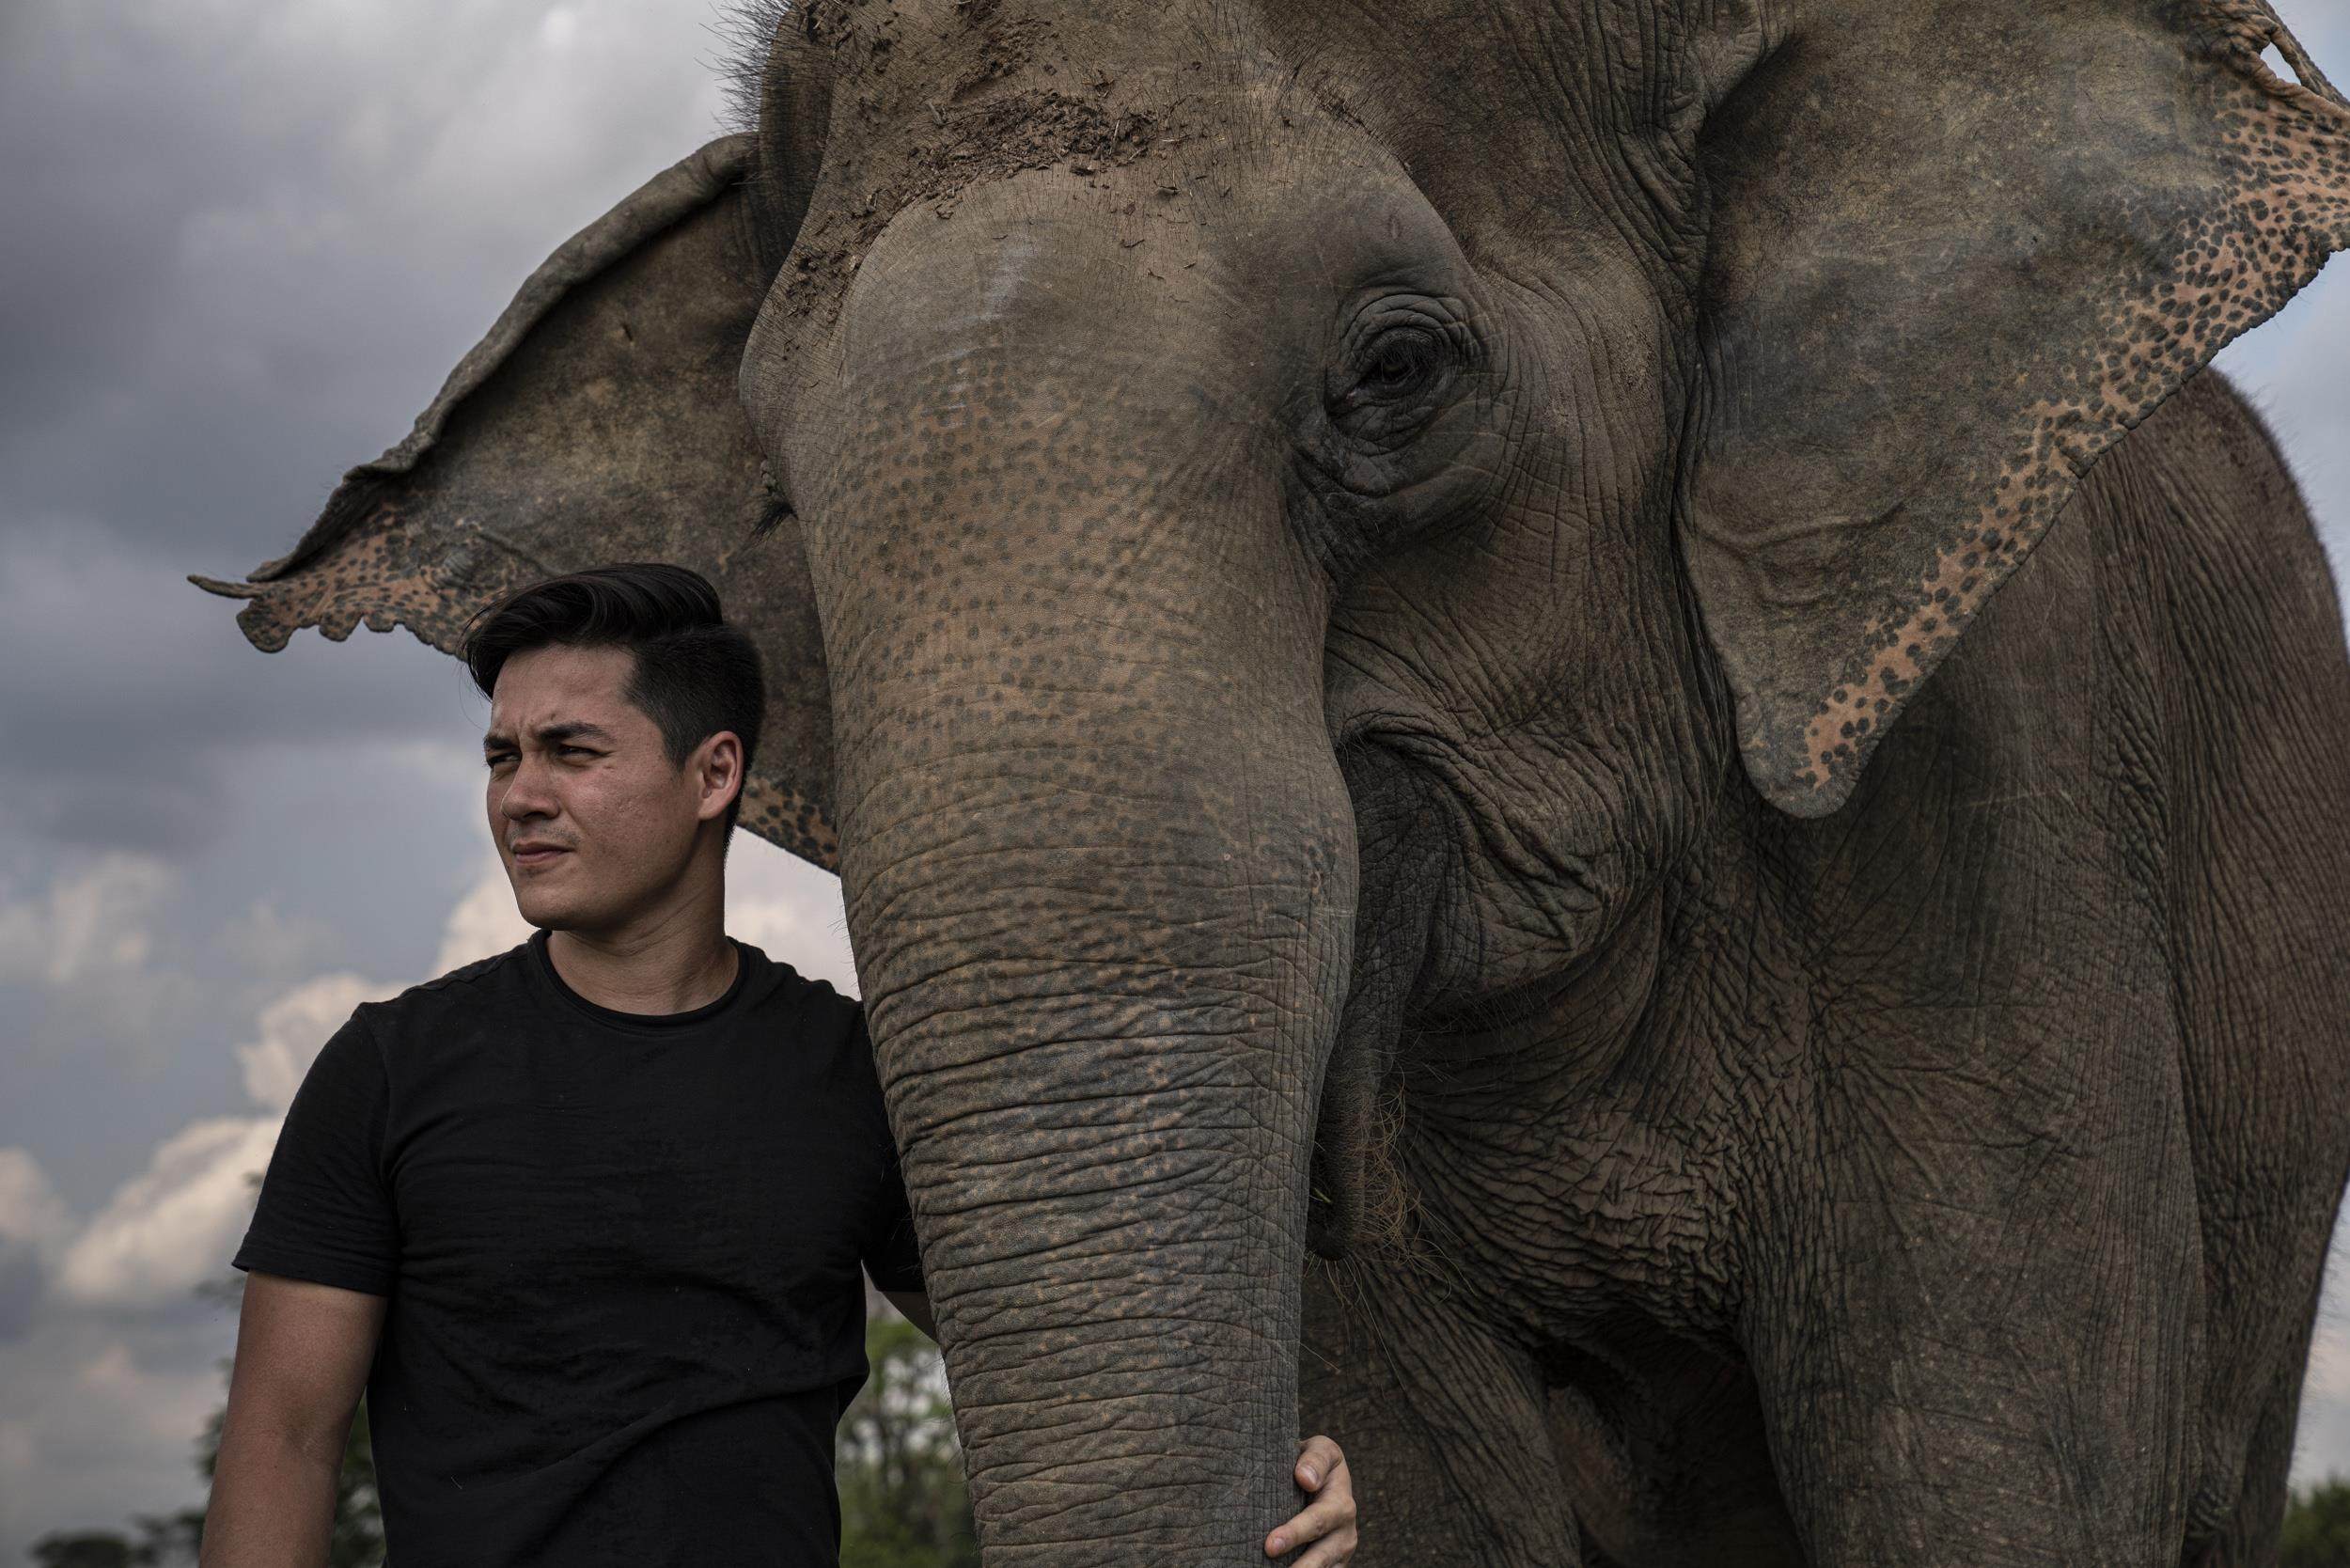 David-Jaya Piot with one of his elephants. Photo: Zalmai